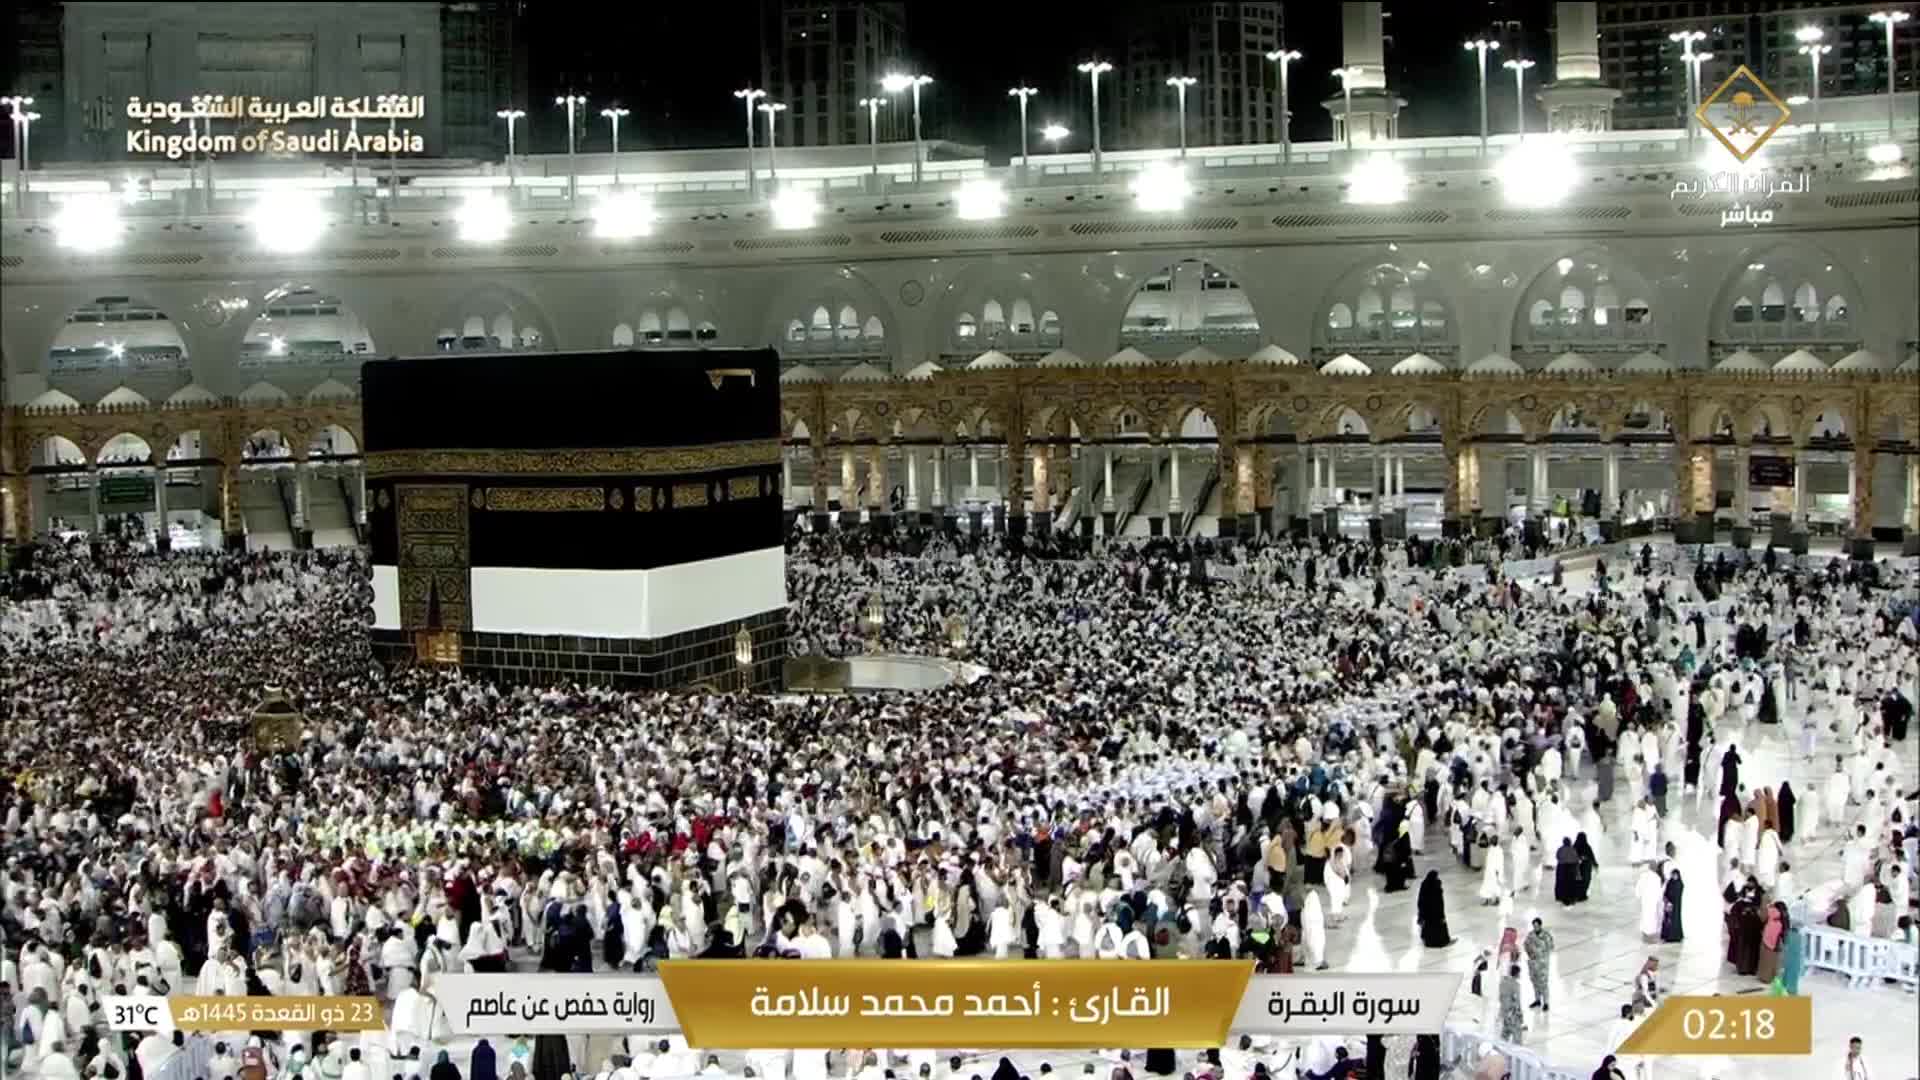 La Mecca Mer. 02:36